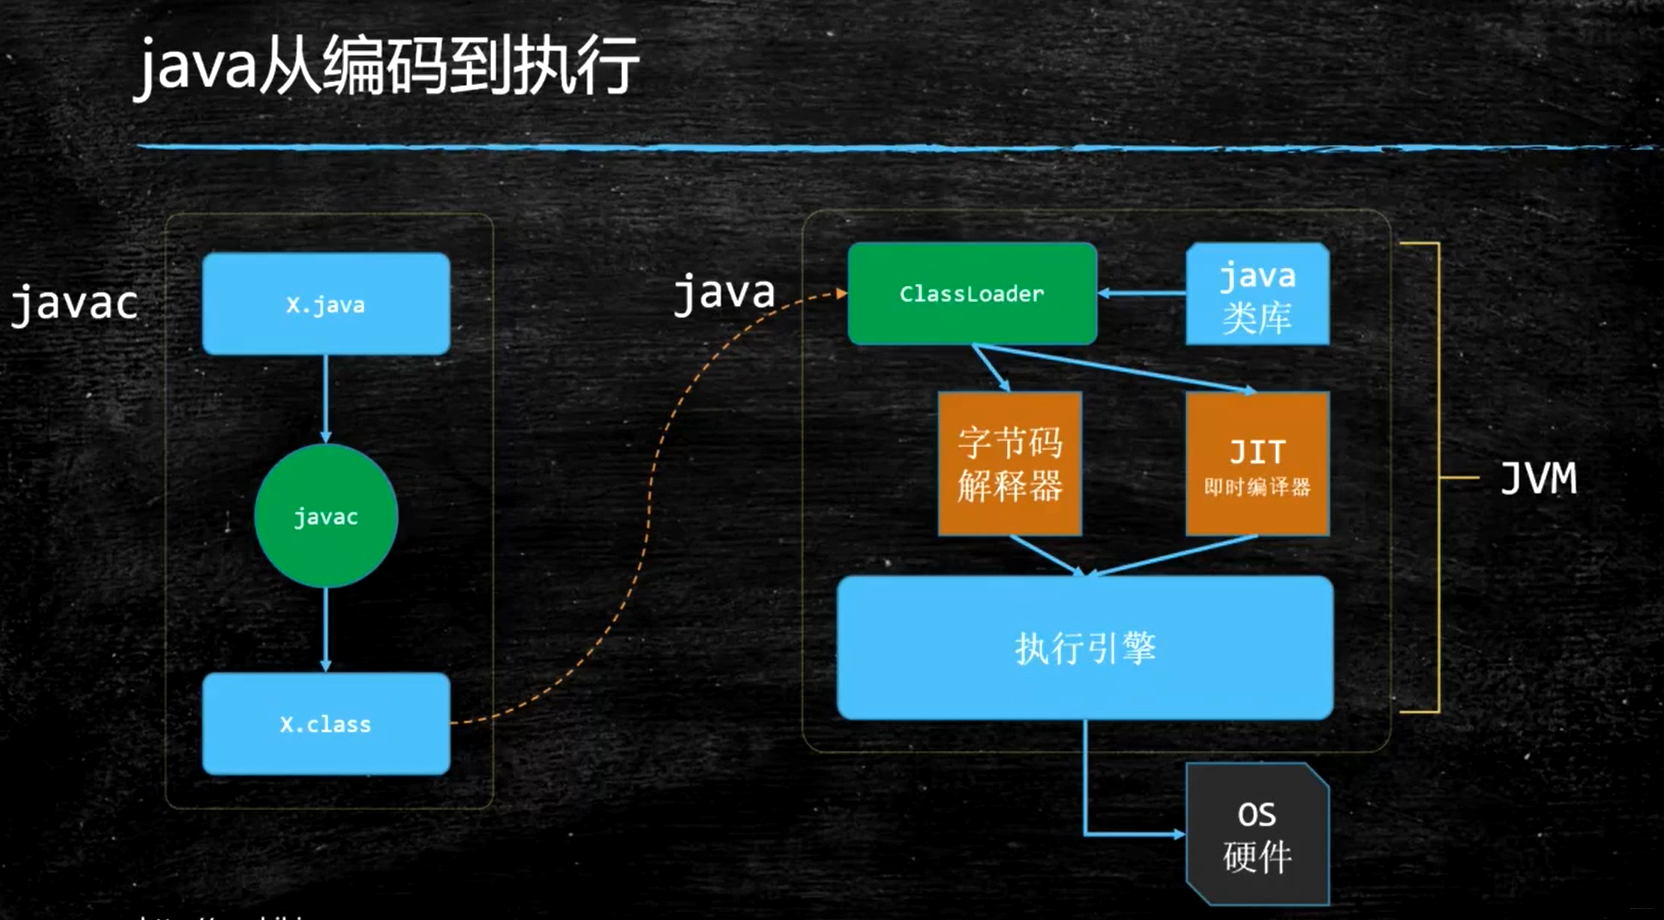 Java Virtual Machine. JVM языки. Презентация java CLASSLOADER. Jvm1. User jvm args txt